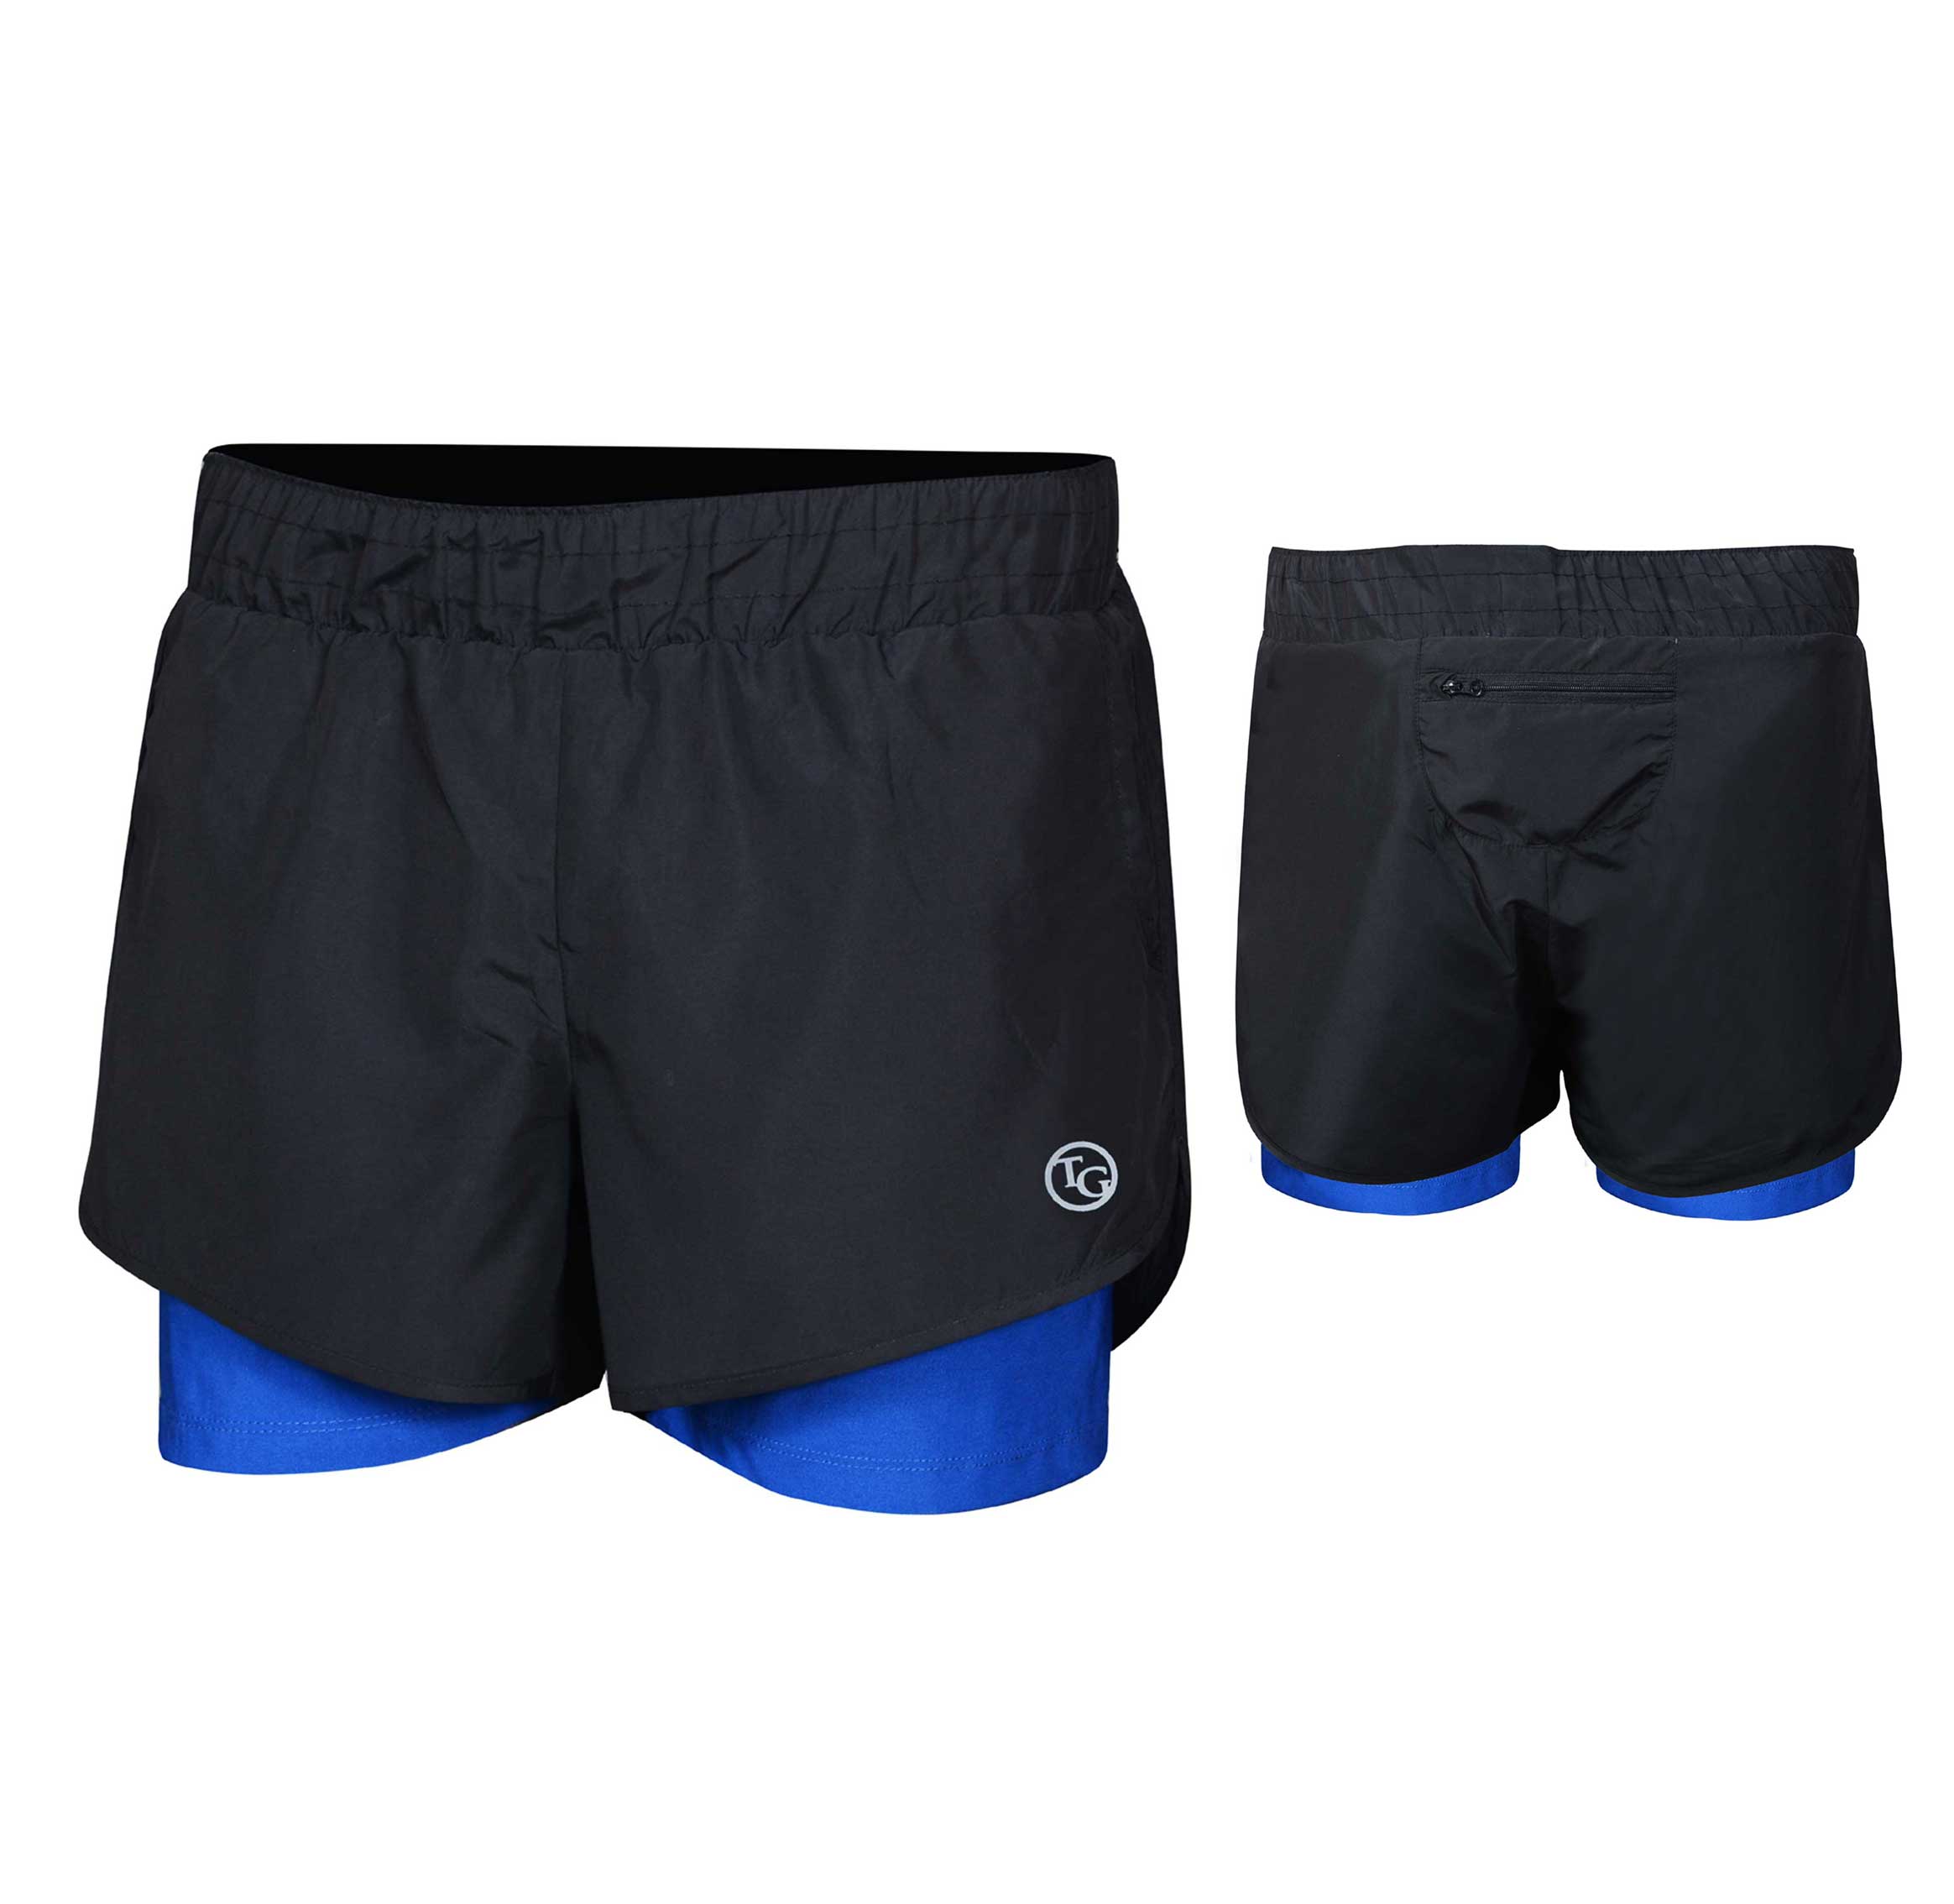 Double Shorts – Technics Garments